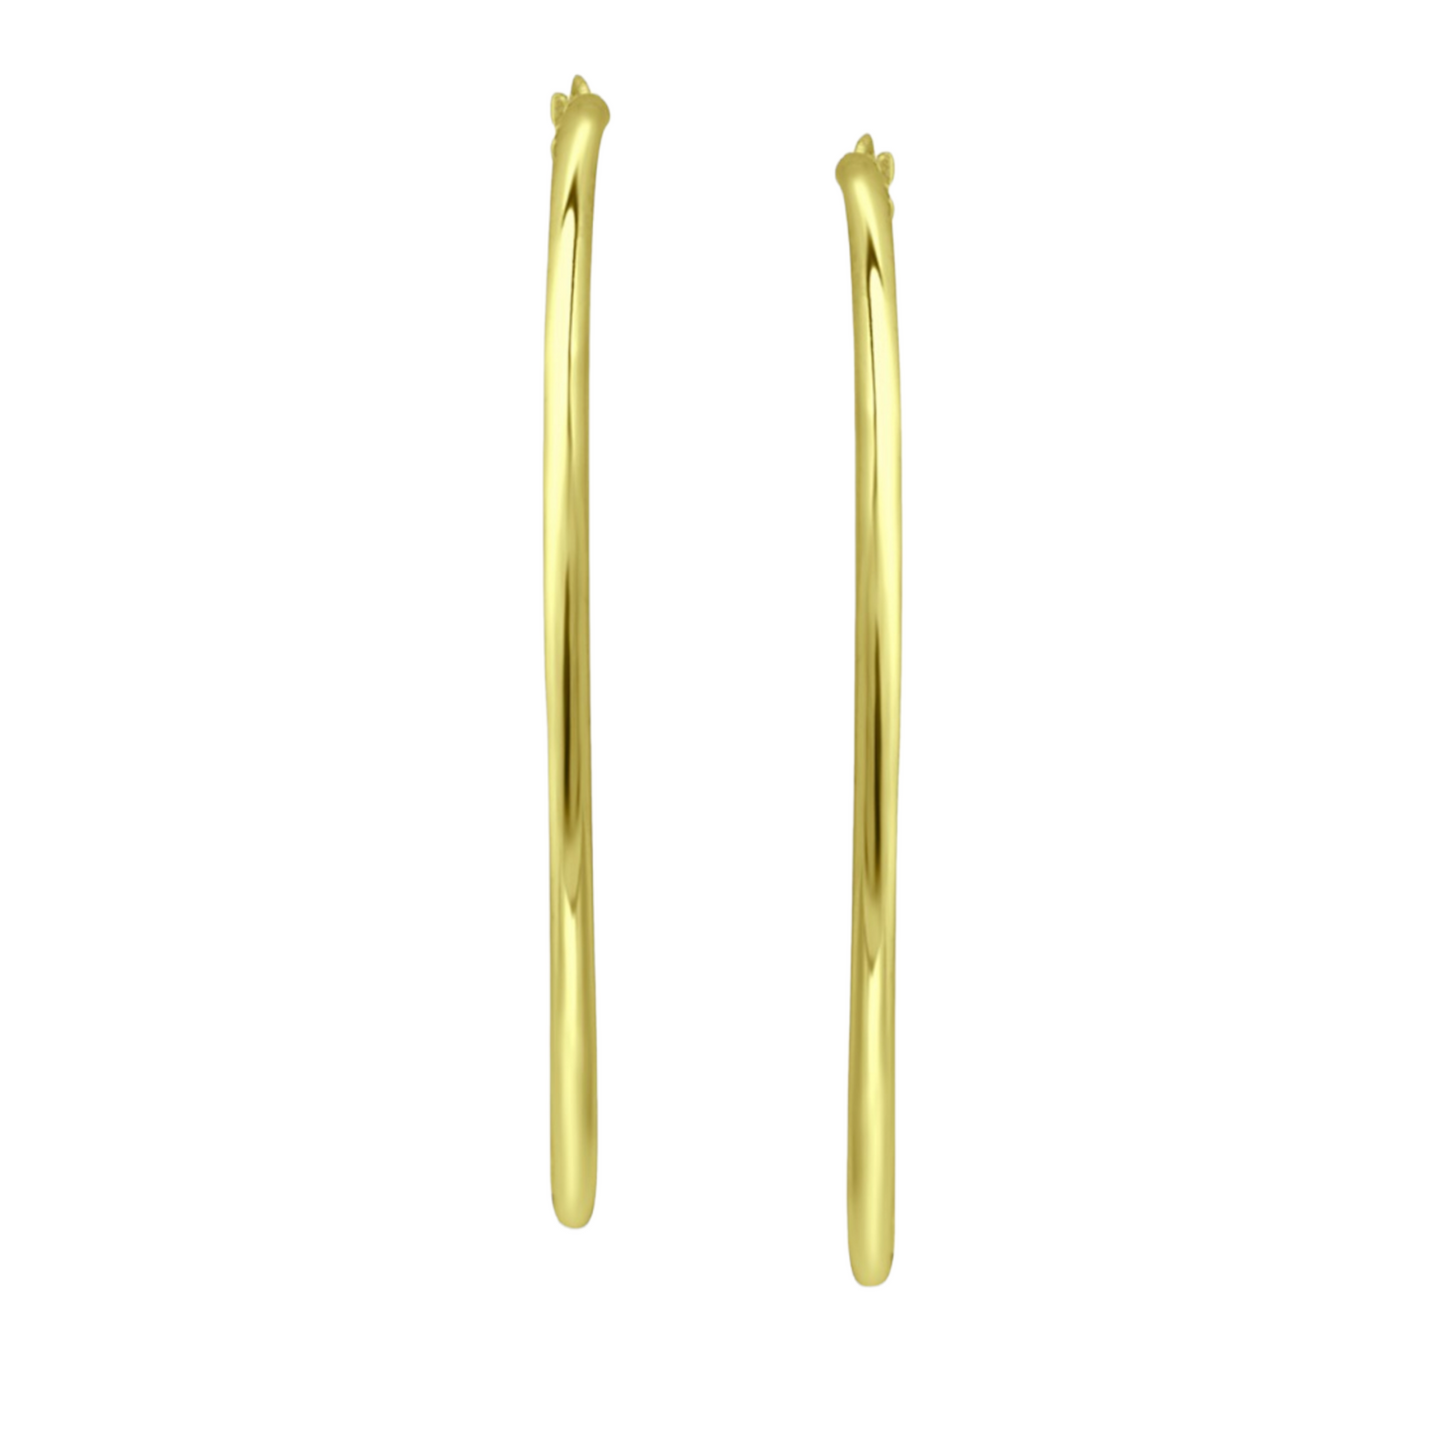 Polished Hoop Earrings in 18k Gold-Plated Sterling Silver